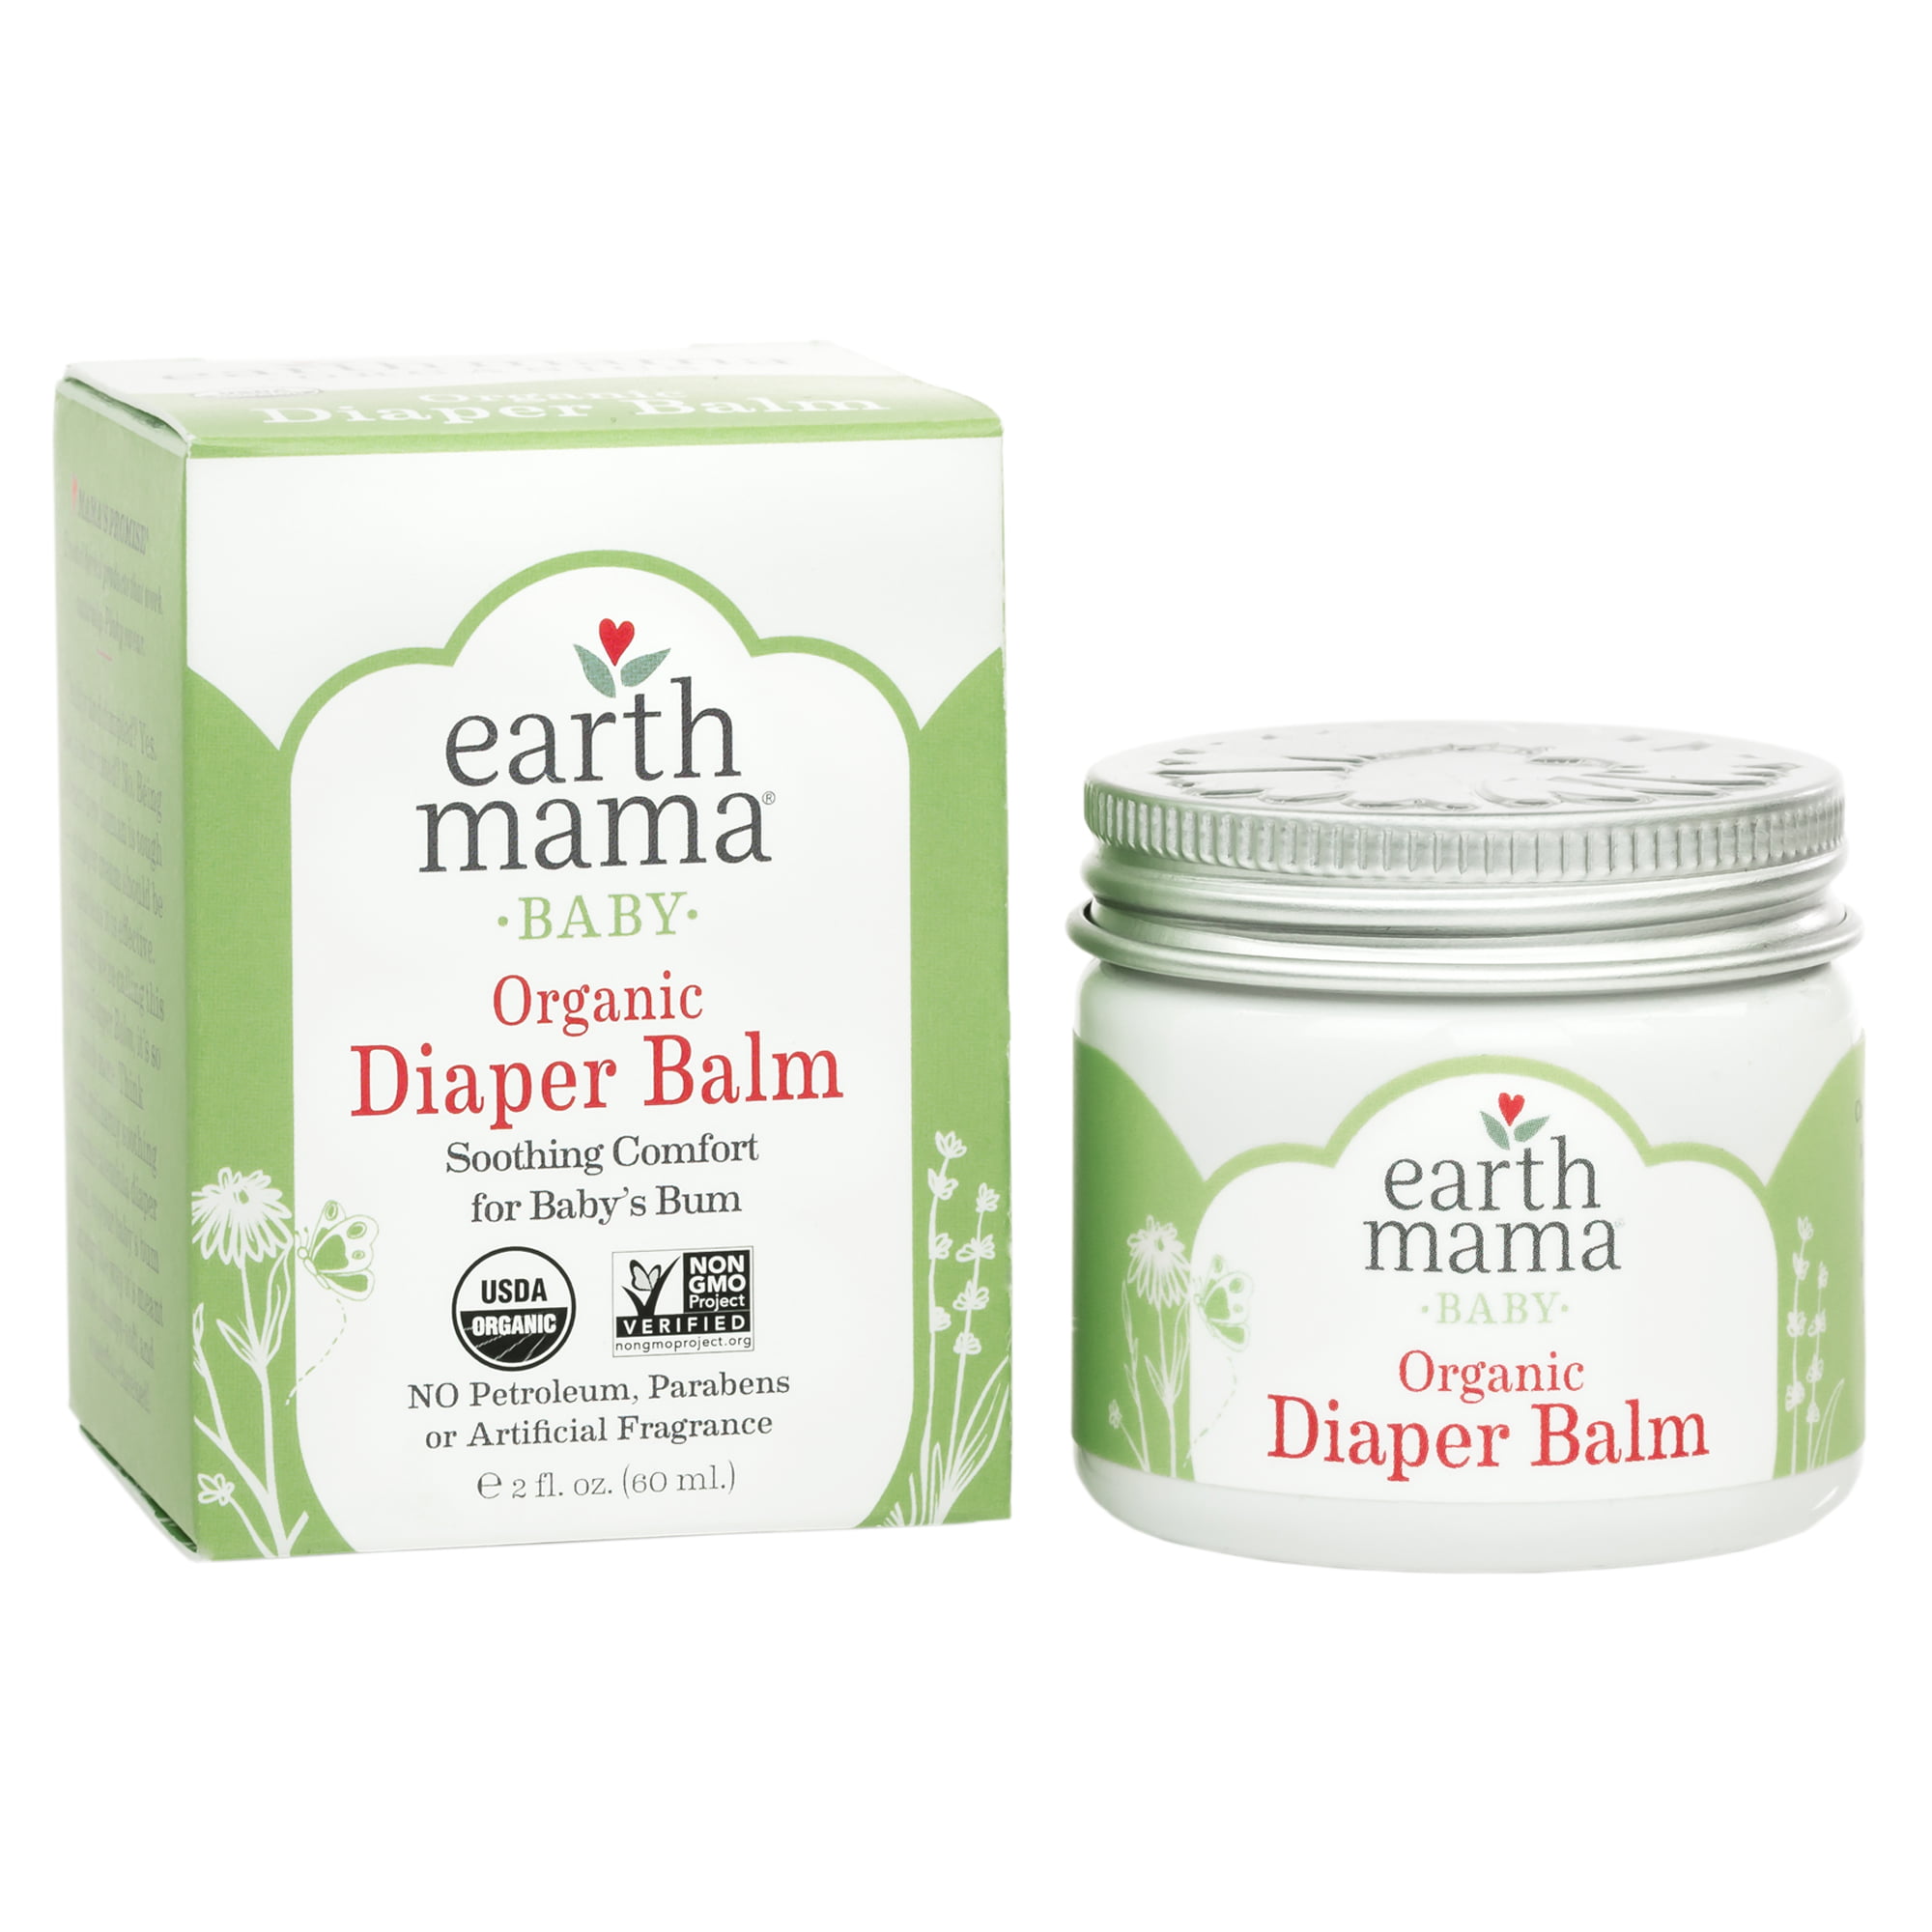 Earth mama organics organic diaper balm 1